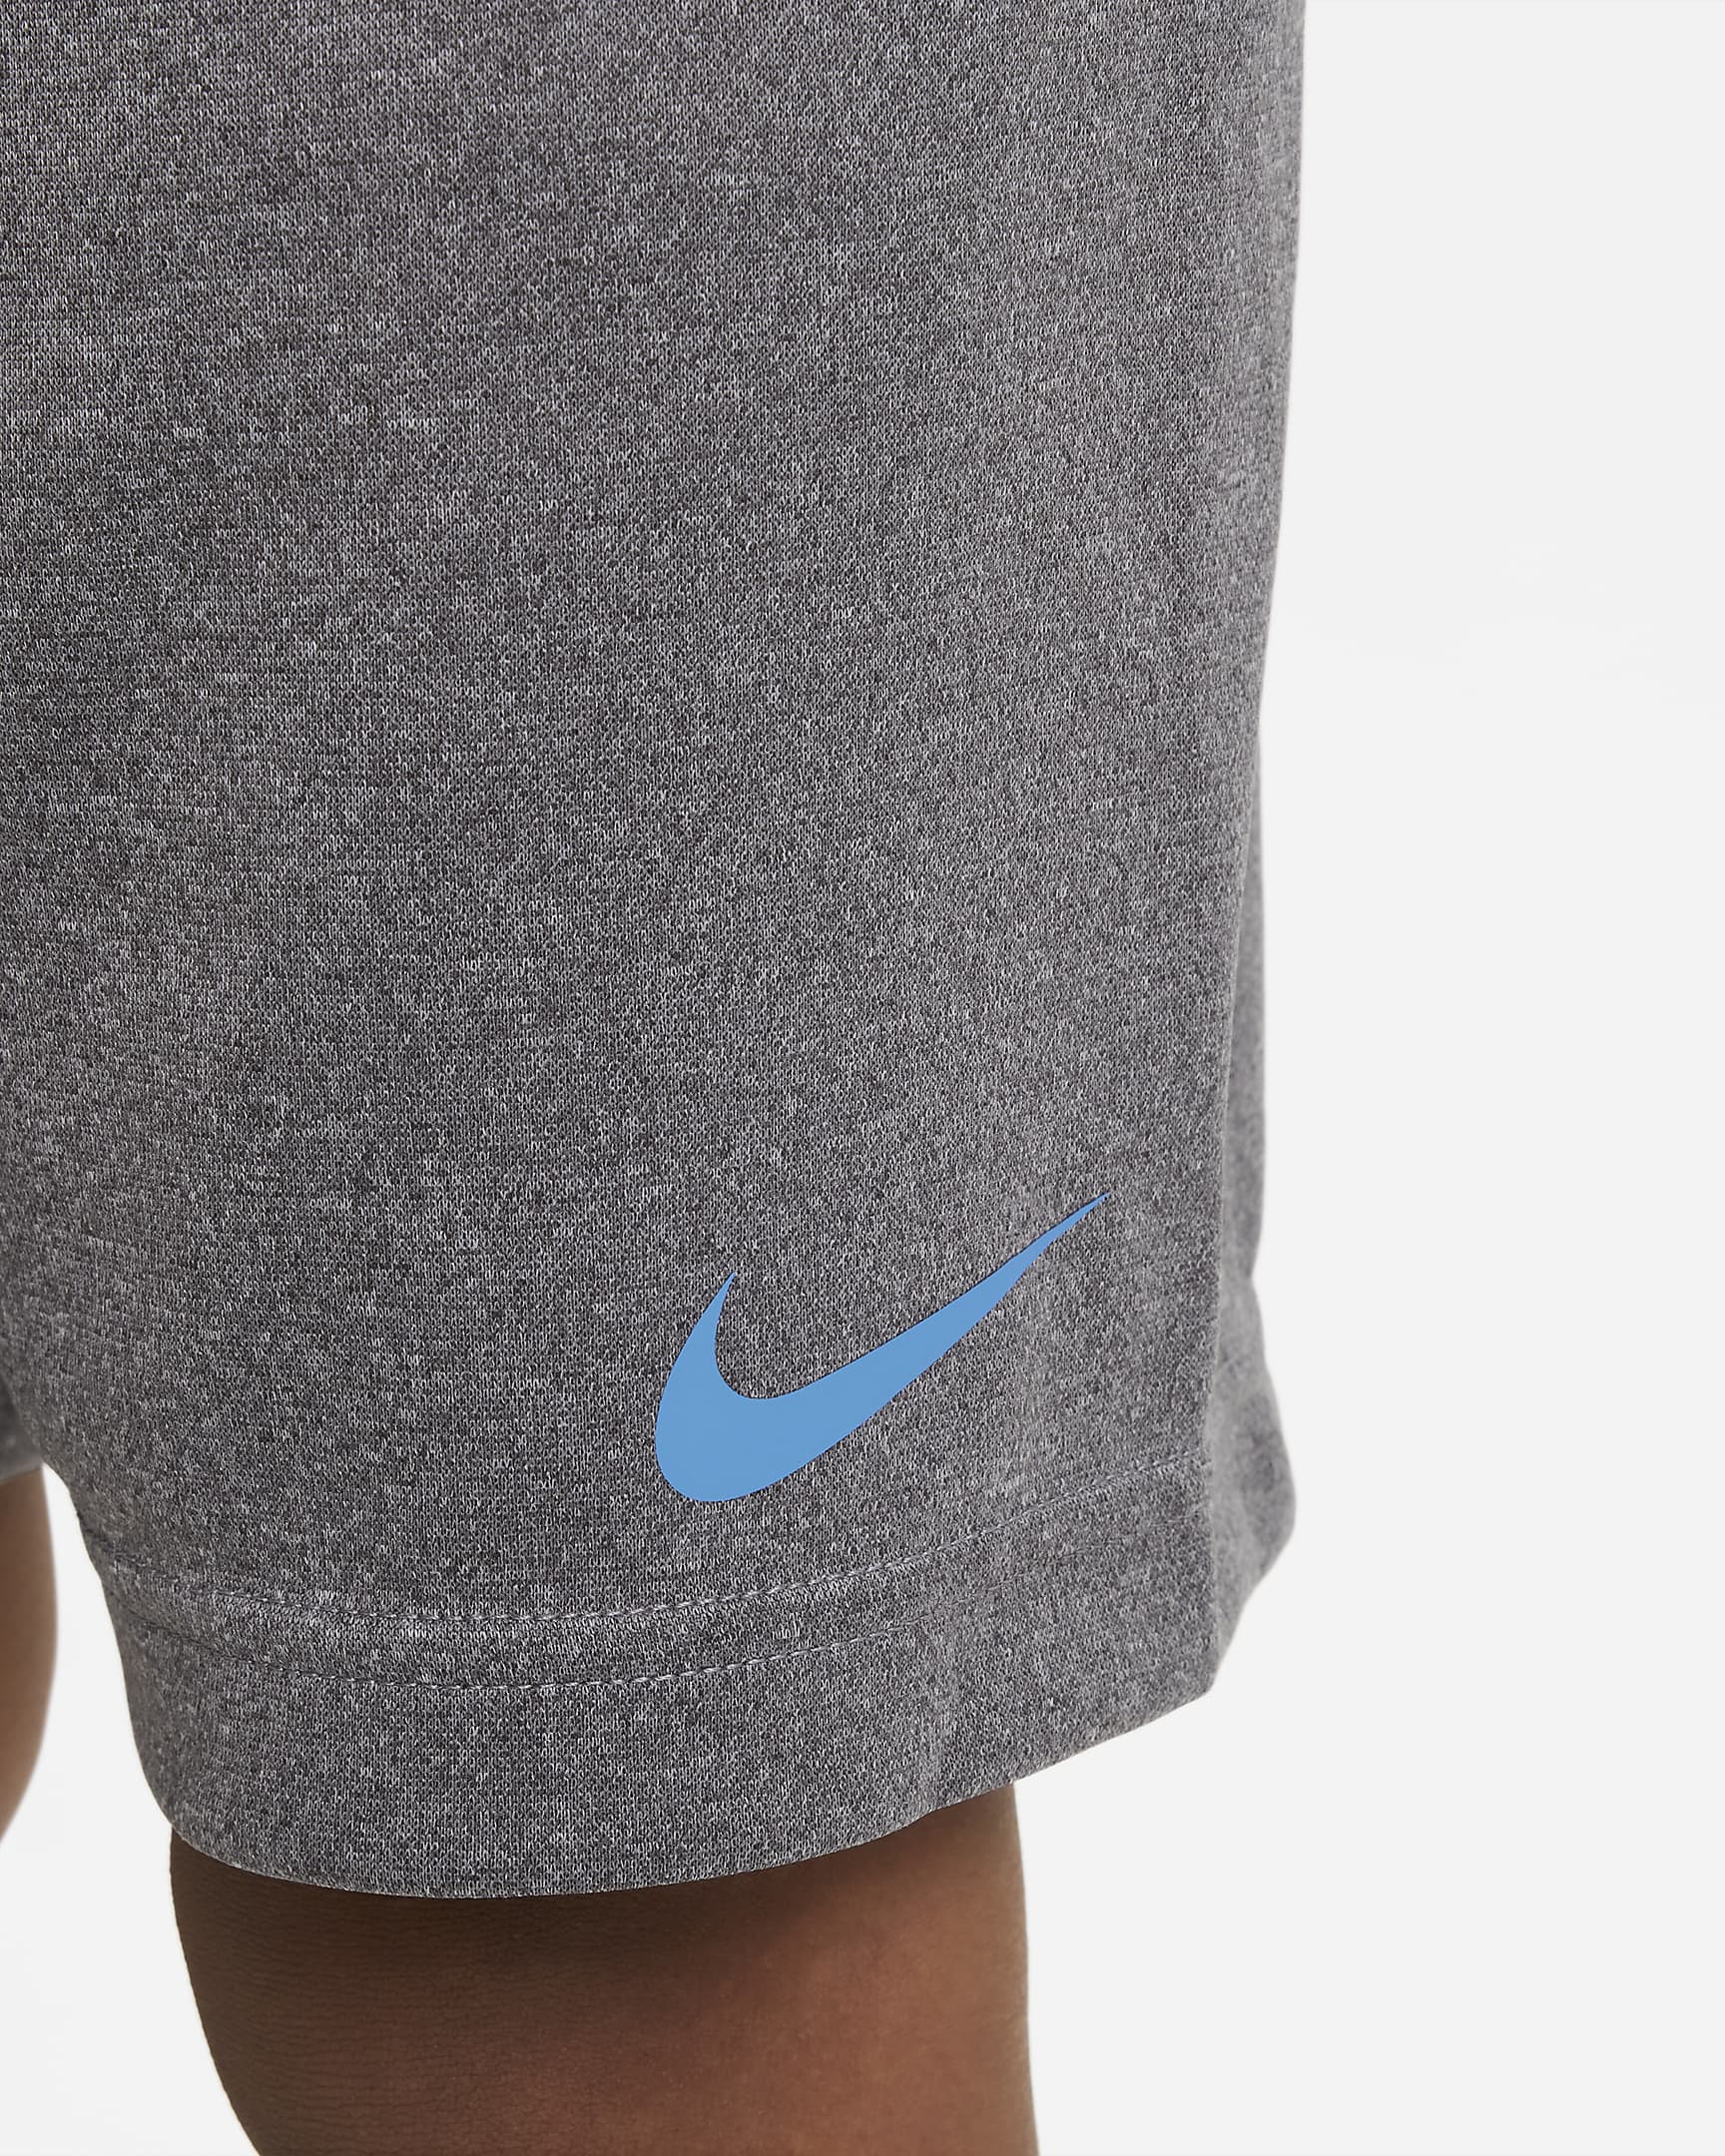 Nike Little Kids' Verbiage T-Shirt and Shorts Set. Nike.com